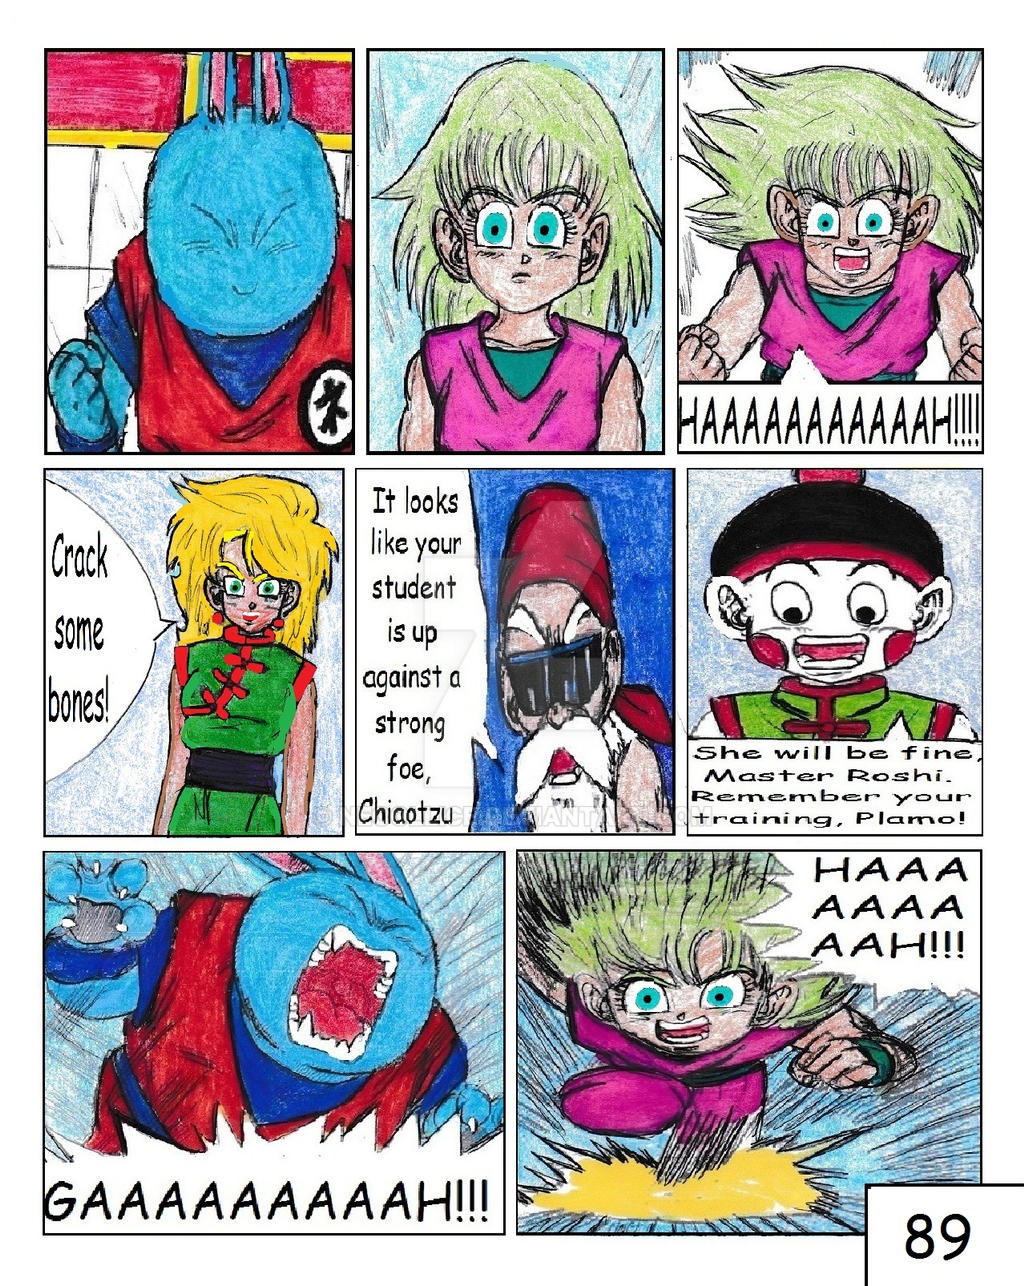 Primeros spoilers del manga Dragon Ball Super 89